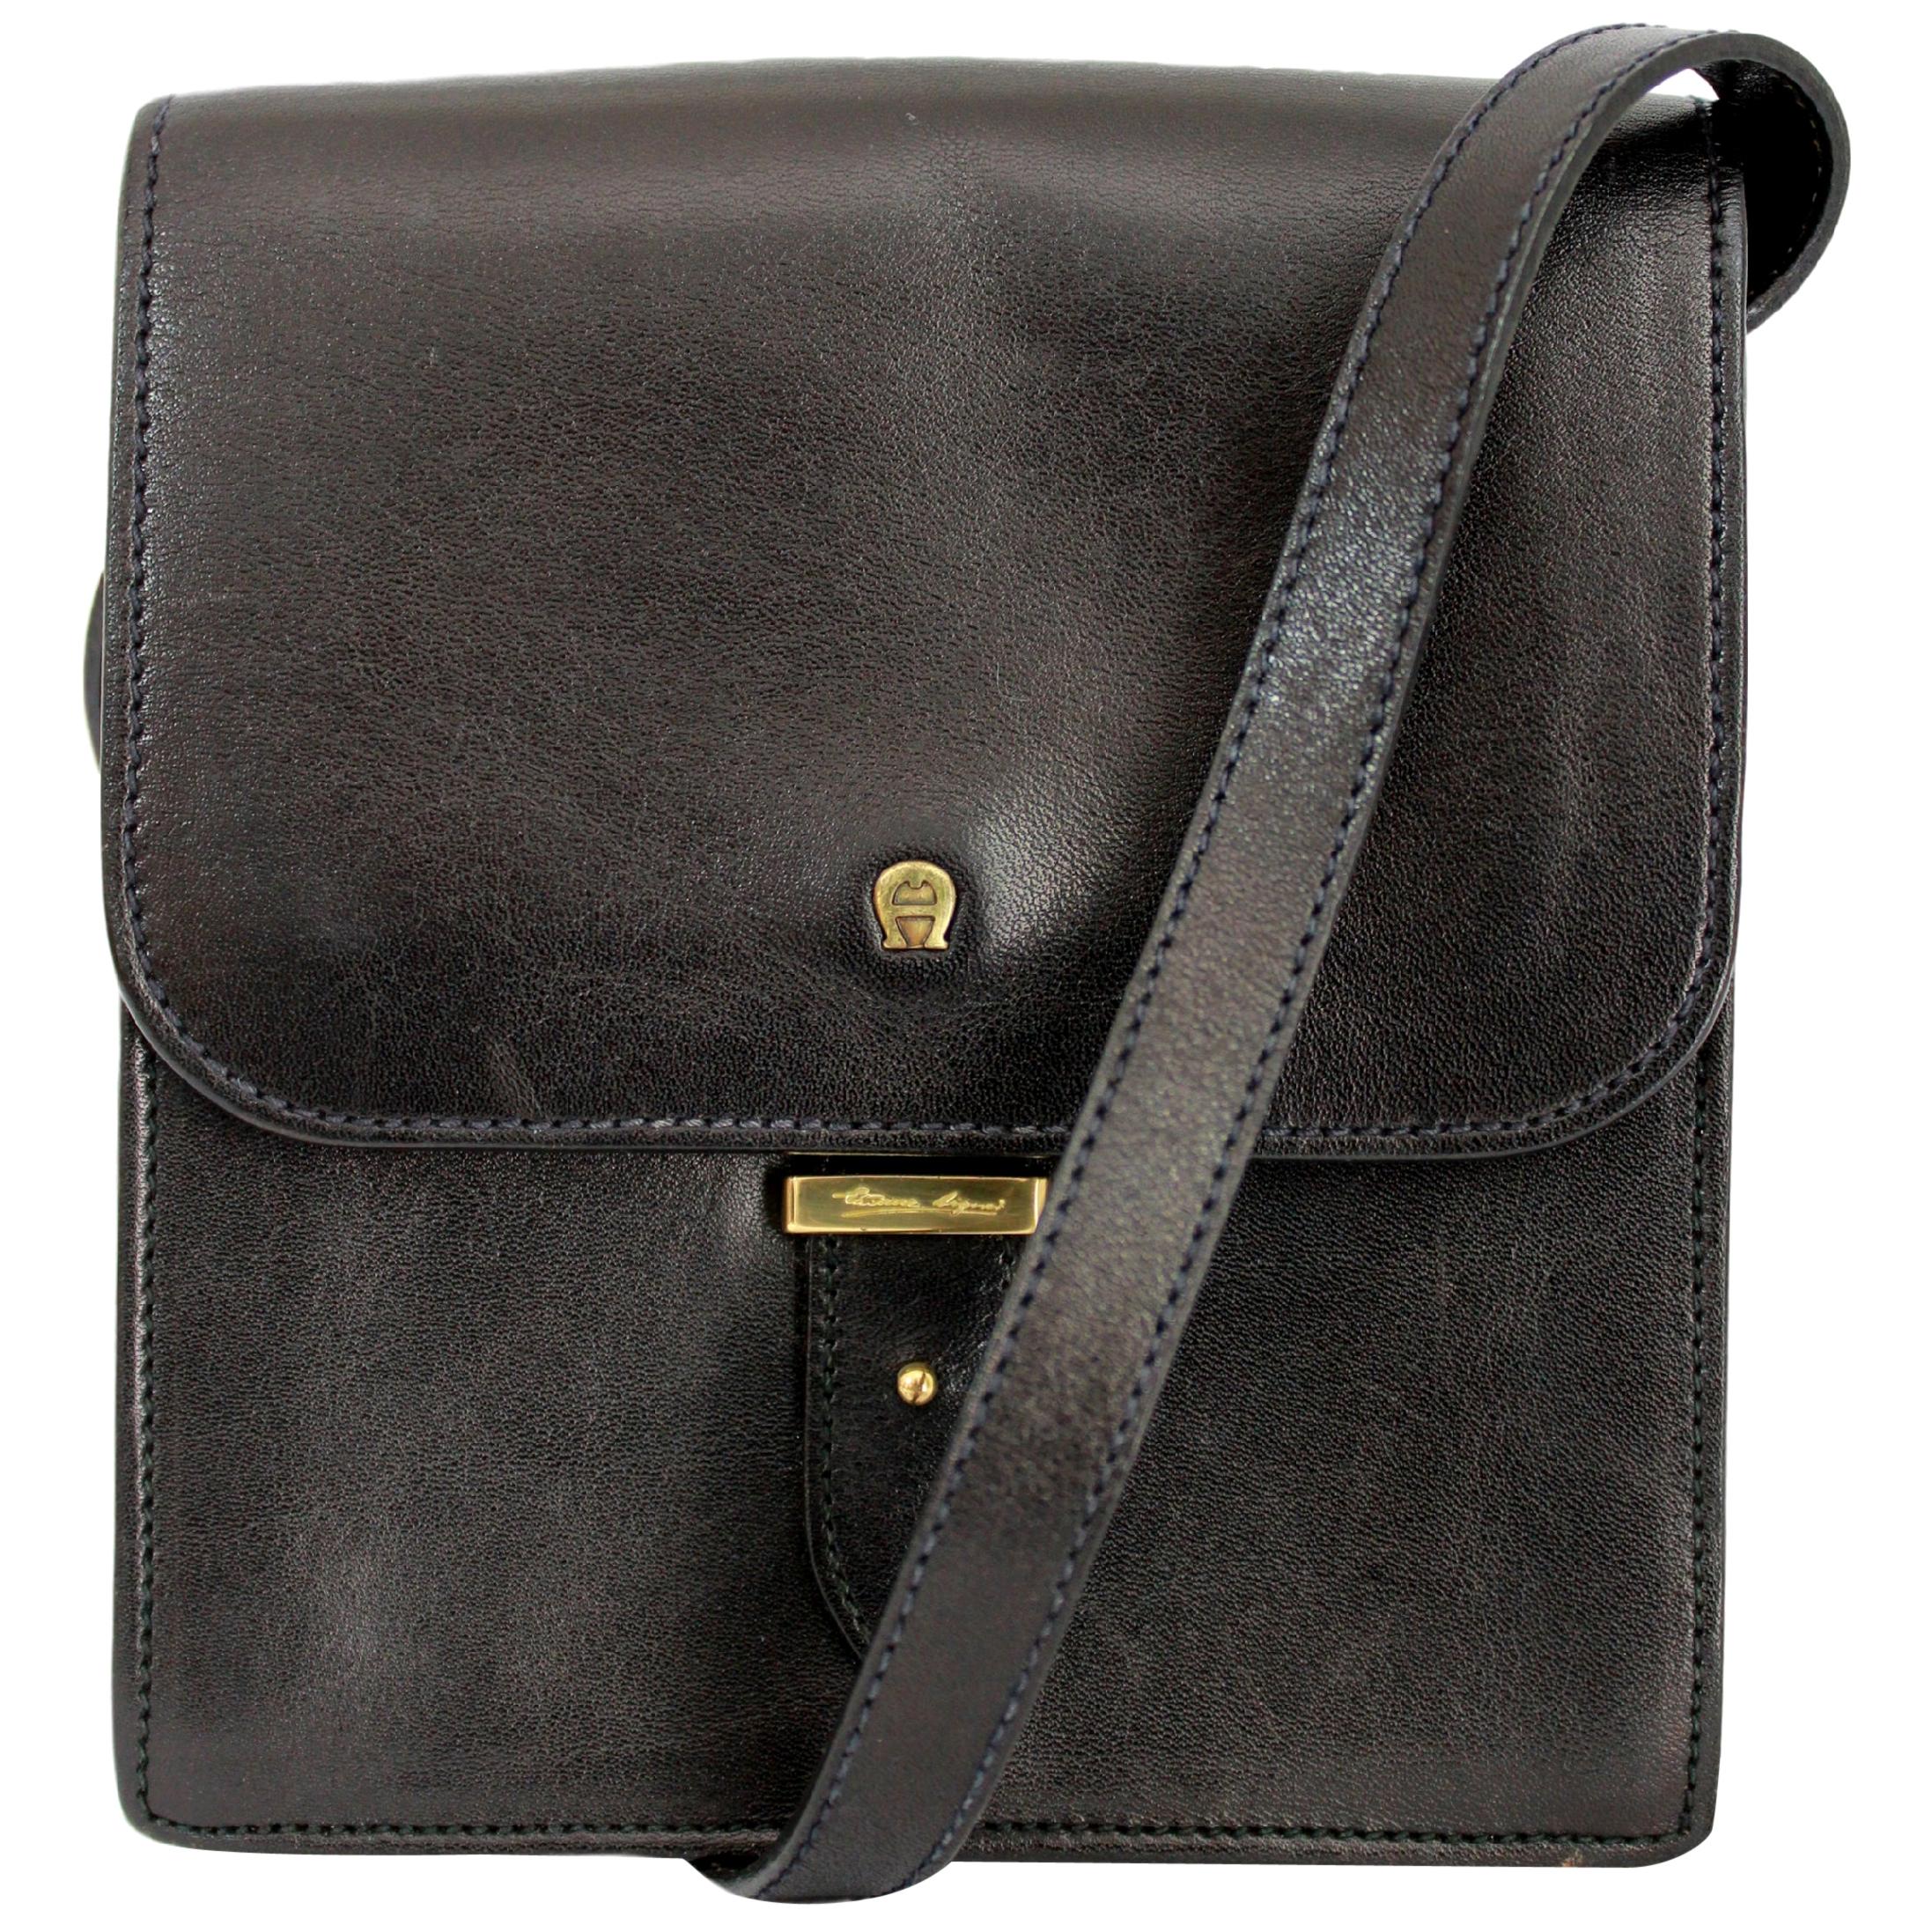 Vintage Etienne Aigner Handbags - 4 For Sale on 1stDibs | etienne aigner  bags vintage, vintage aigner leather purse, etienne aigner vintage purse